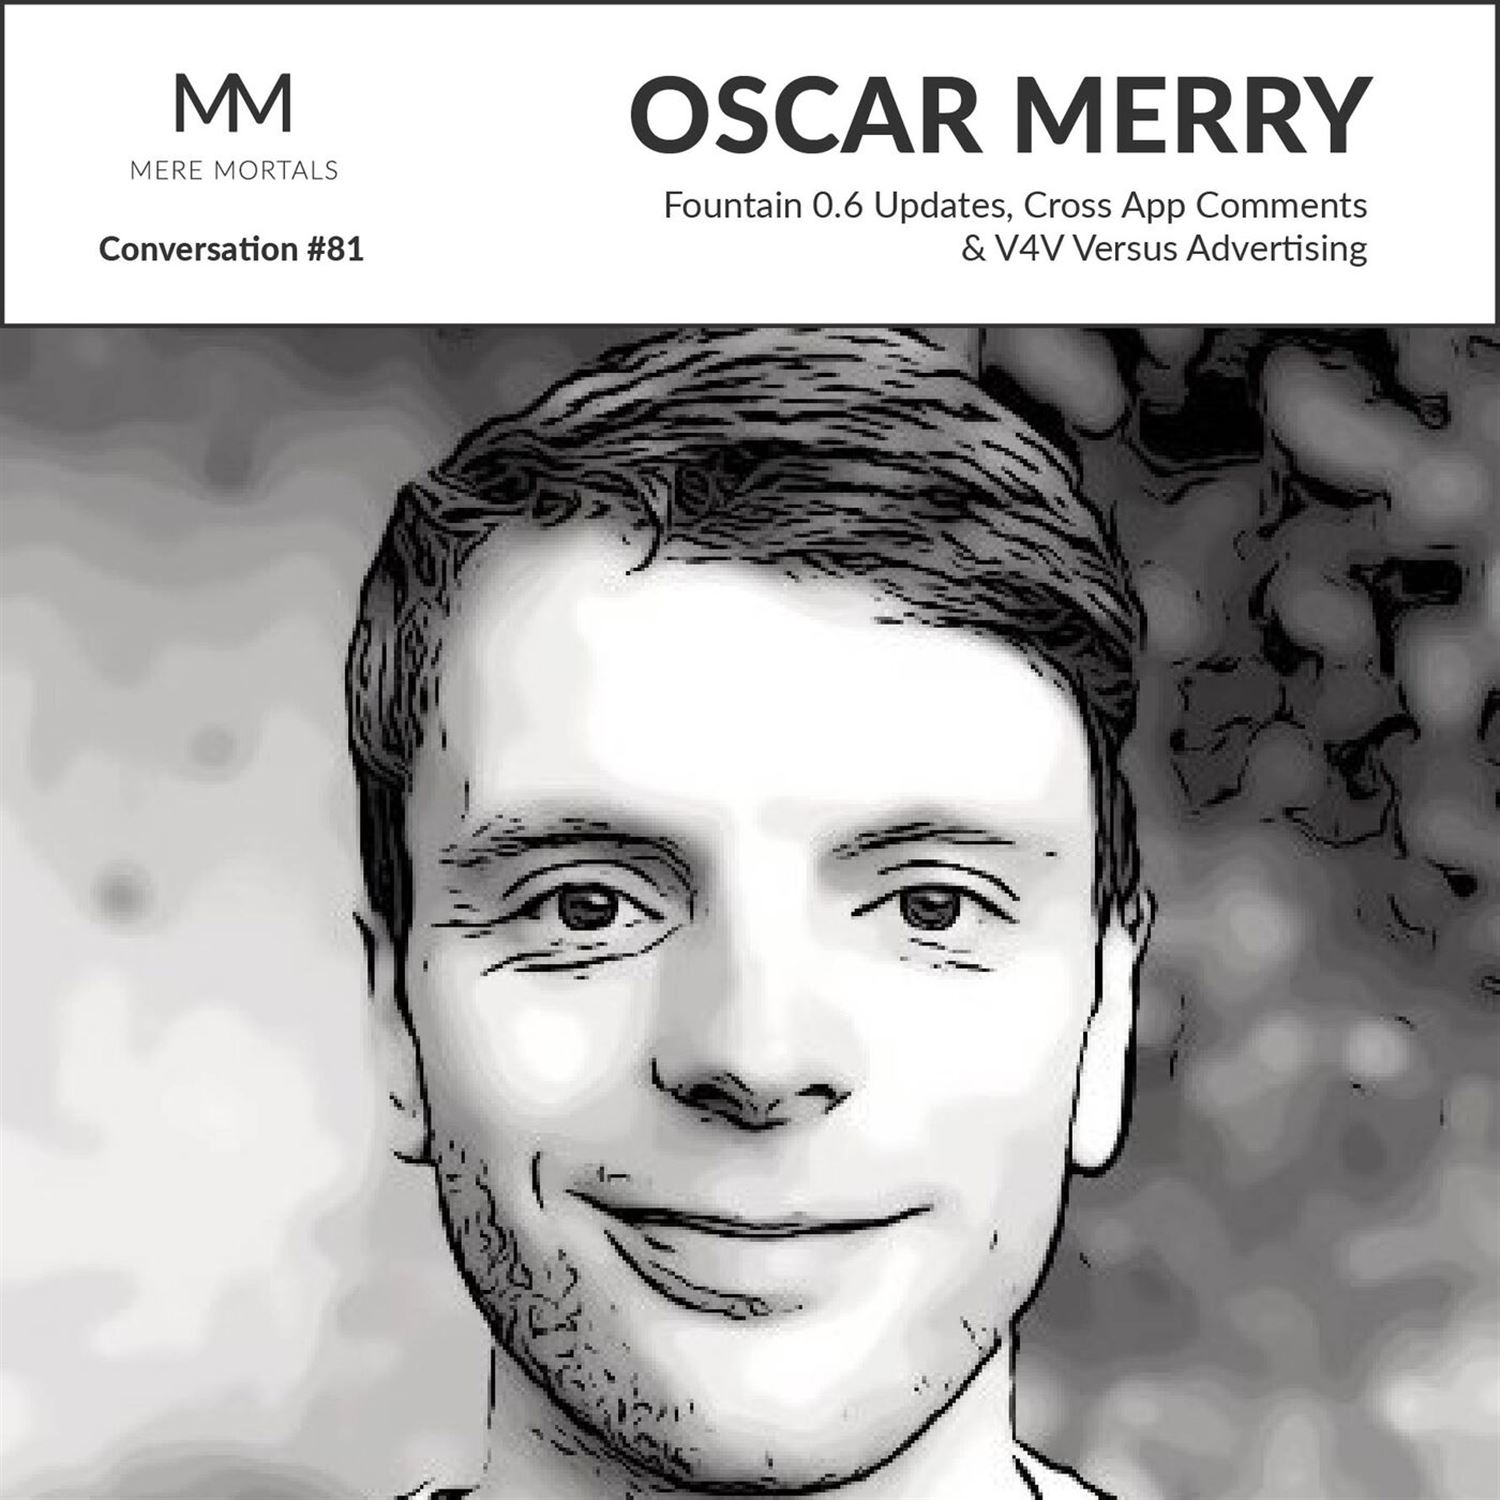 OSCAR MERRY | Fountain 0.6 Updates, Cross App Comments & V4V Versus Advertising